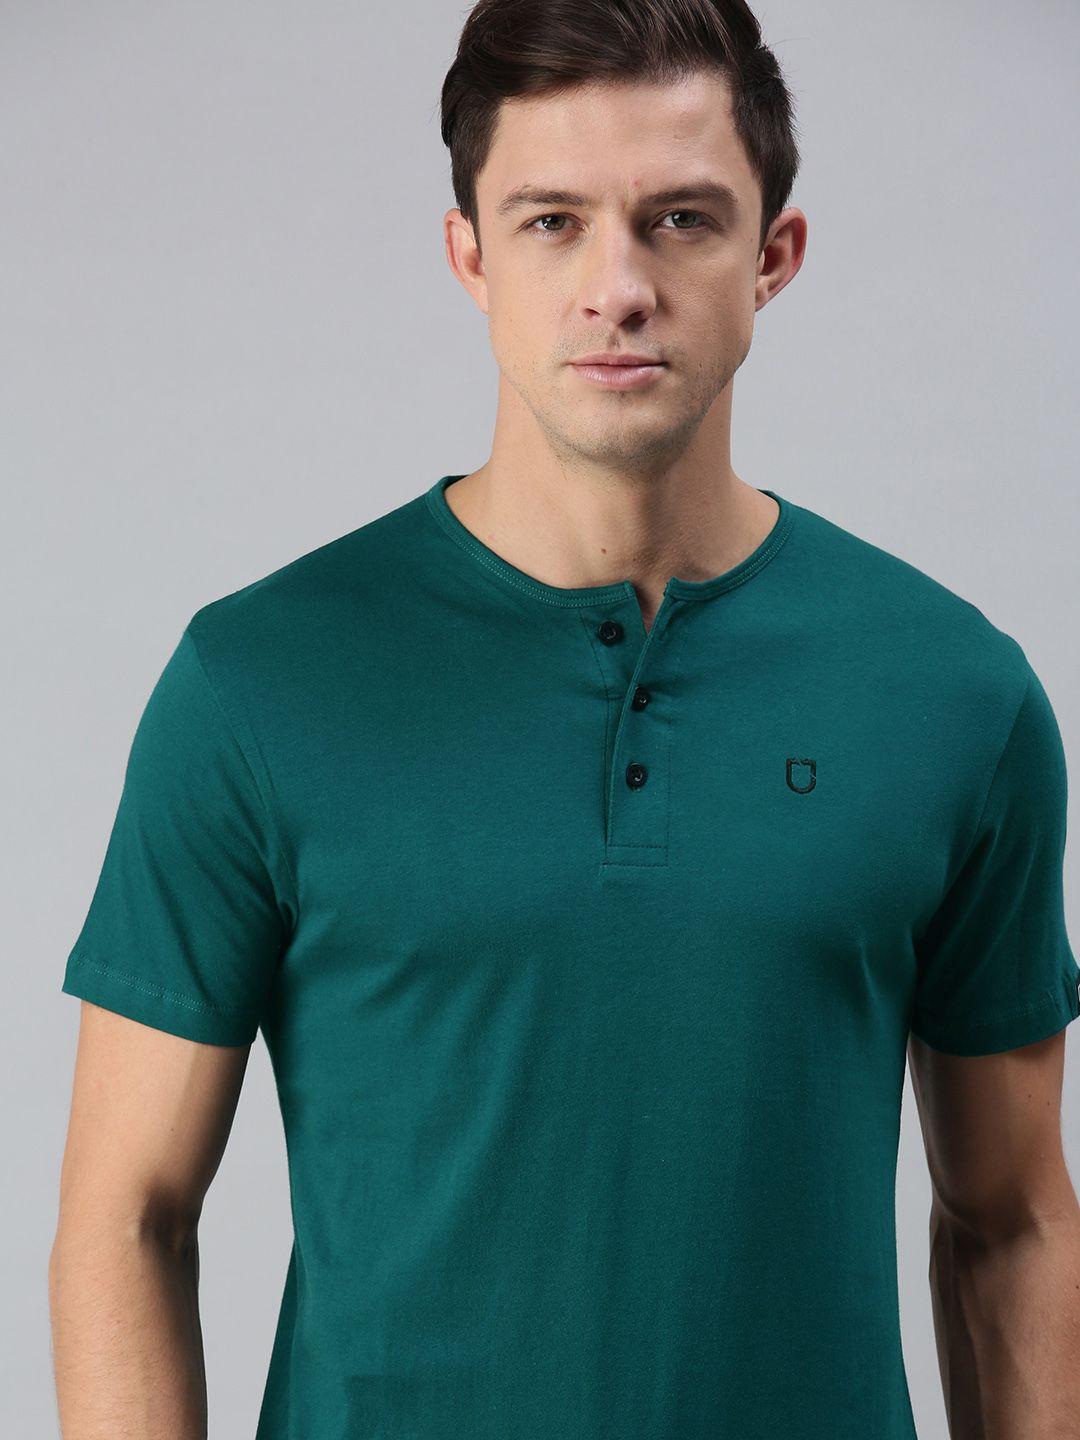 urbano-fashion-men-teal-green-henley-neck-pure-cotton-slim-fit-pure-cotton-t-shirt